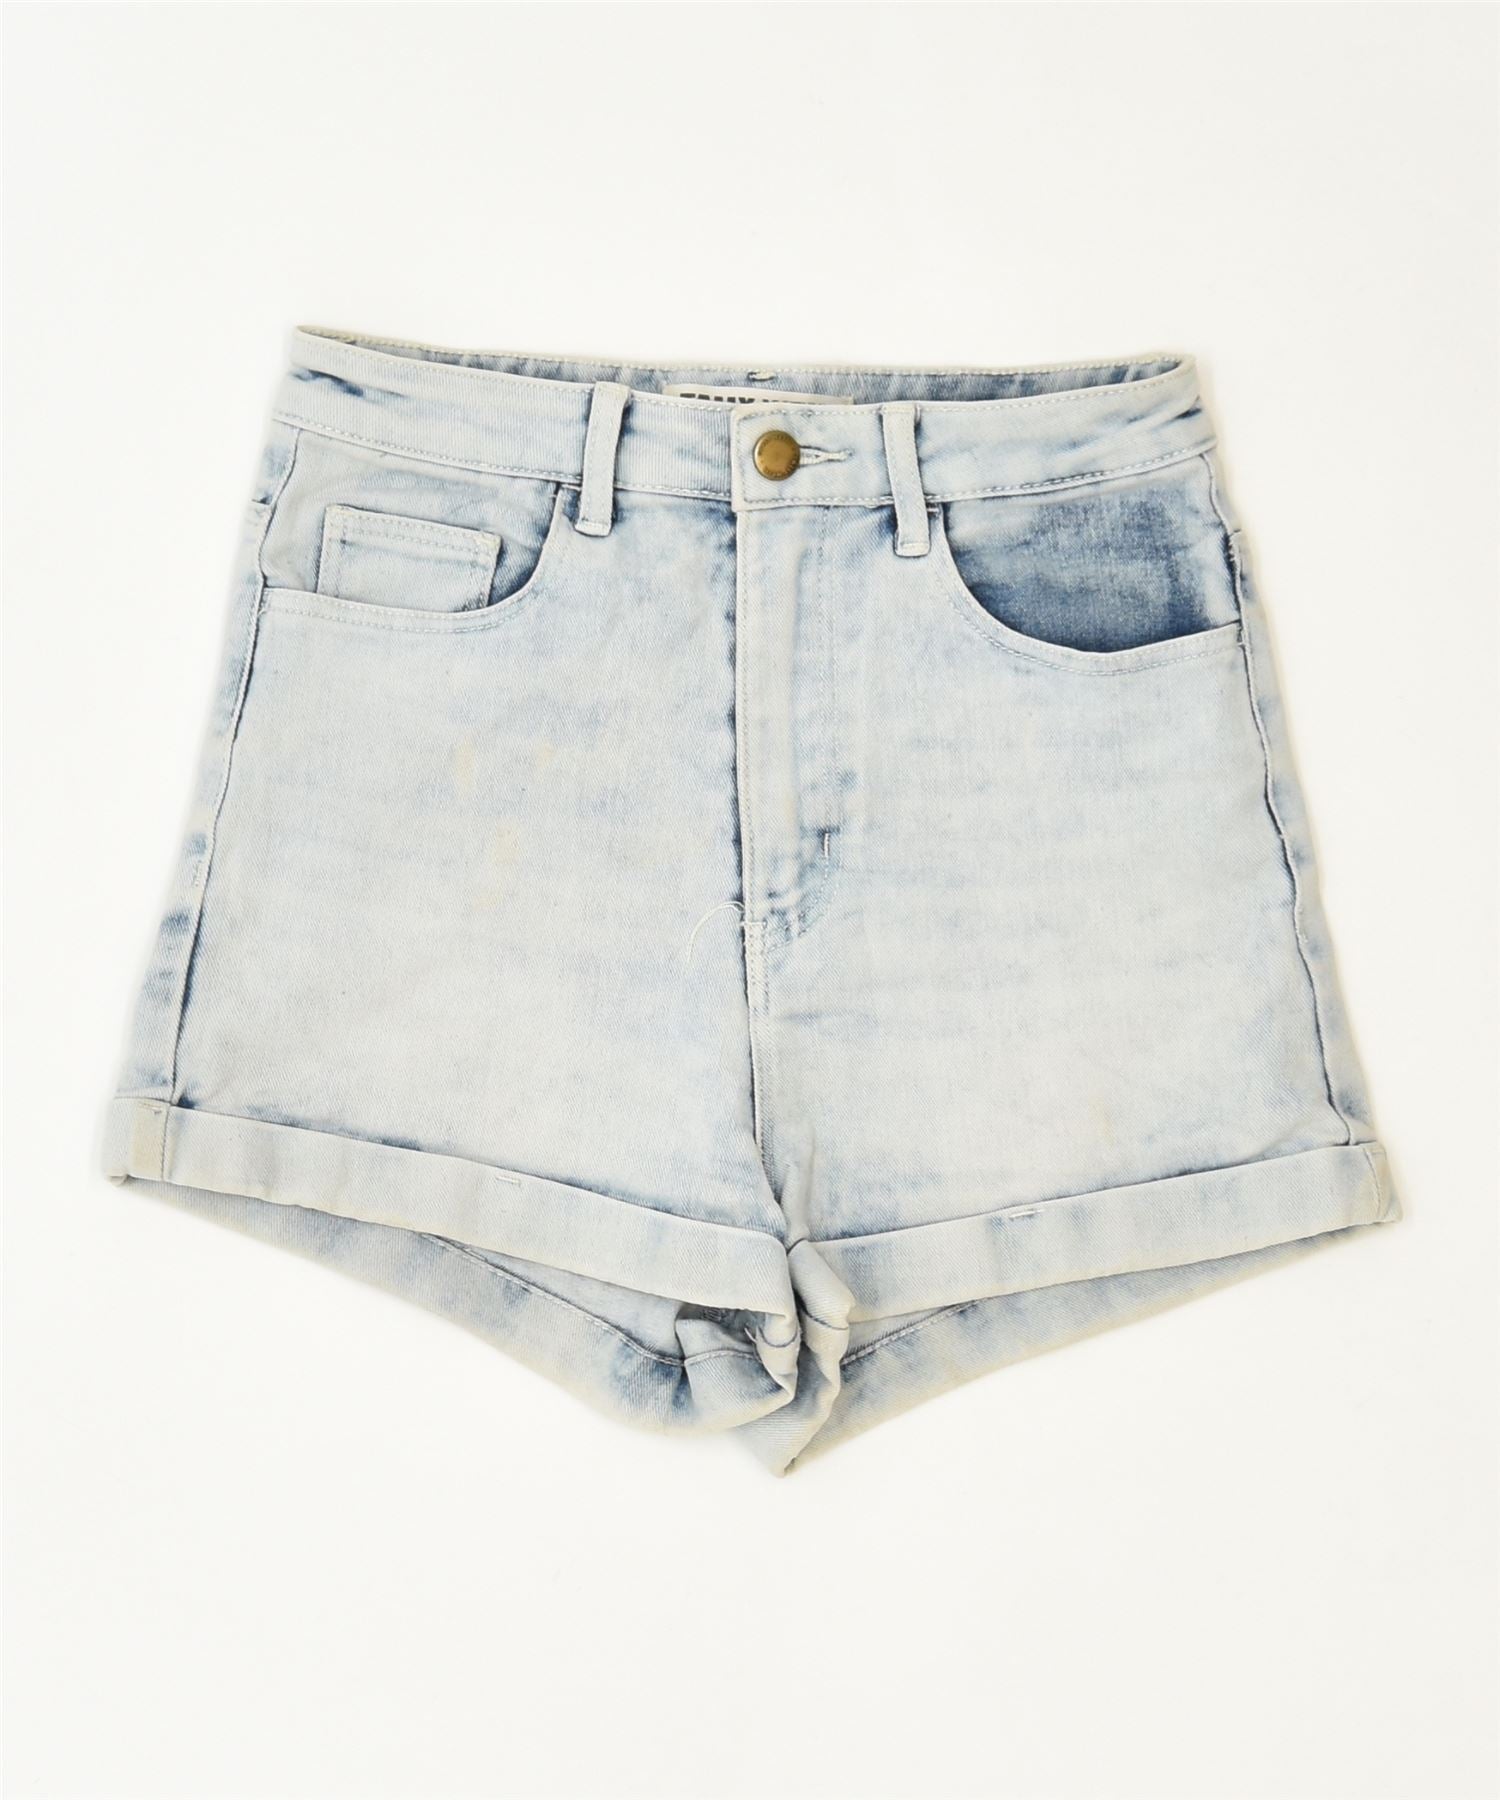 Wax Jea Shorts Womens Medium Distressed Short Shorts Blue Denim Hot Pants |  eBay